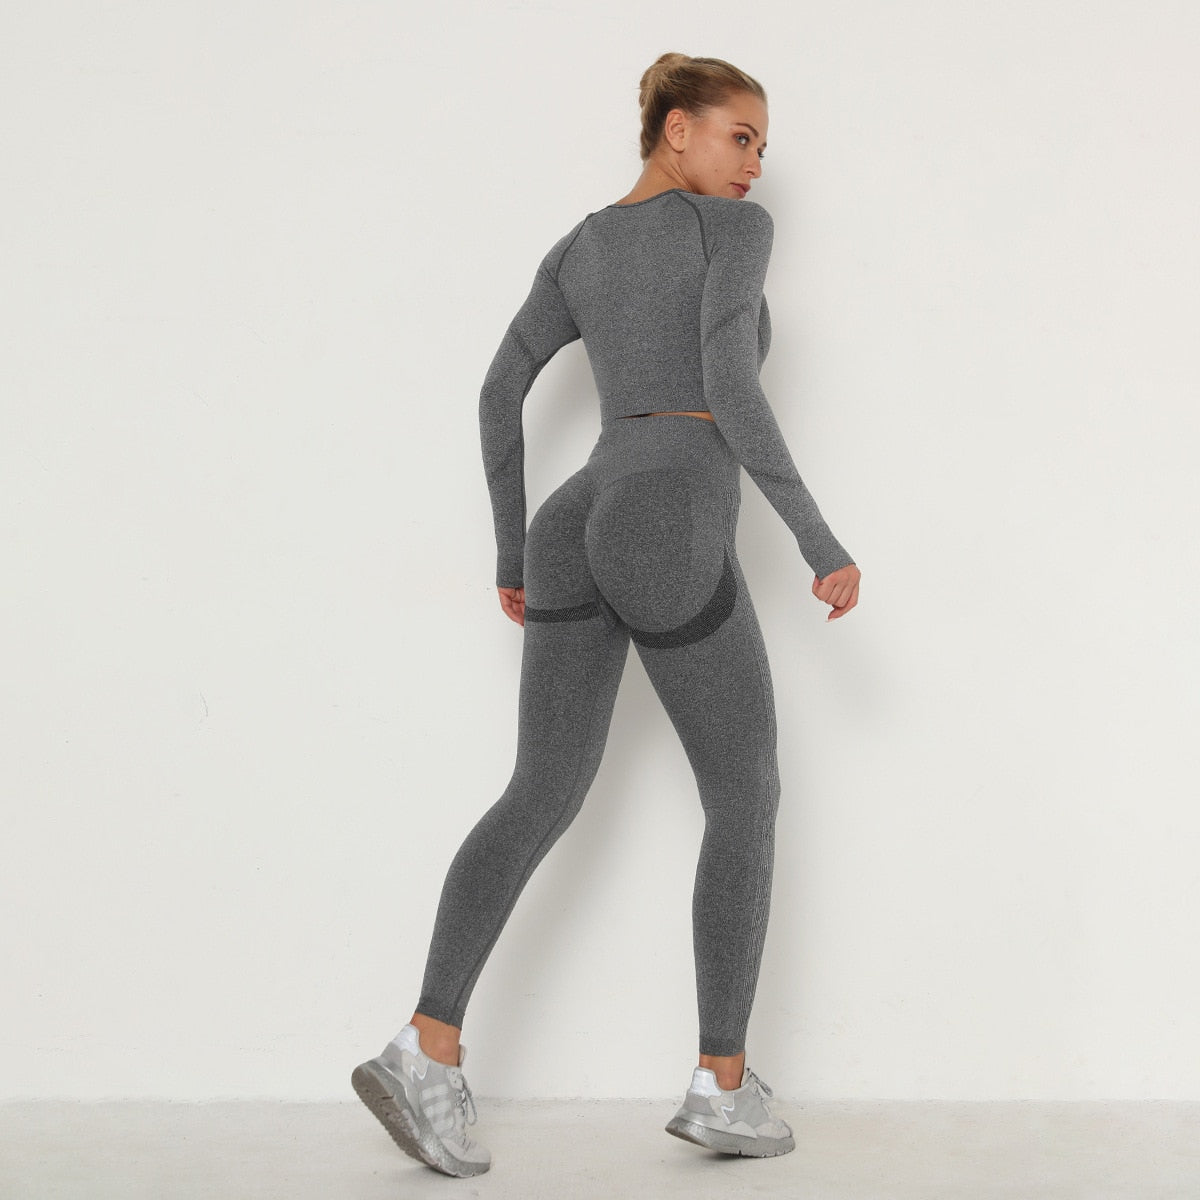 Laya Long Sleeve Seamless Fitness Set - Dark Grey / S - Sport Finesse